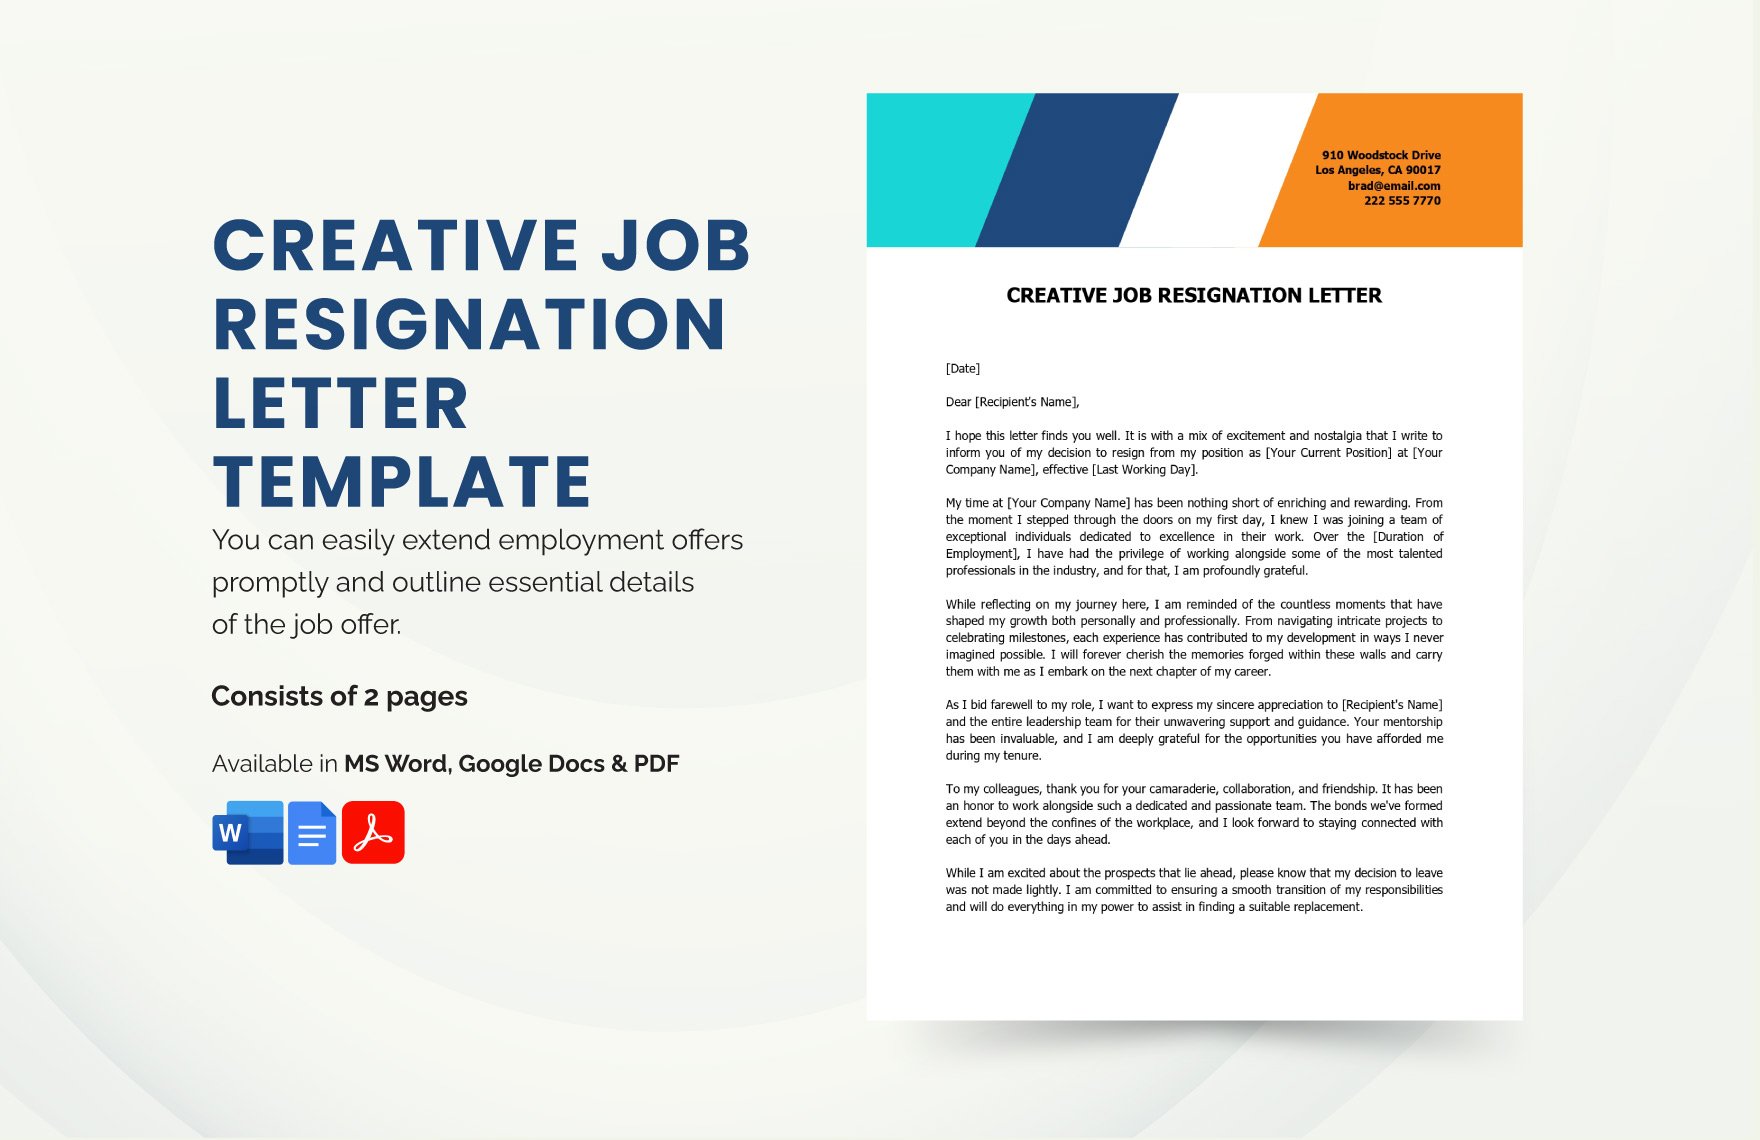 Creative Job Resignation Letter Template in Word, Google Docs, PDF